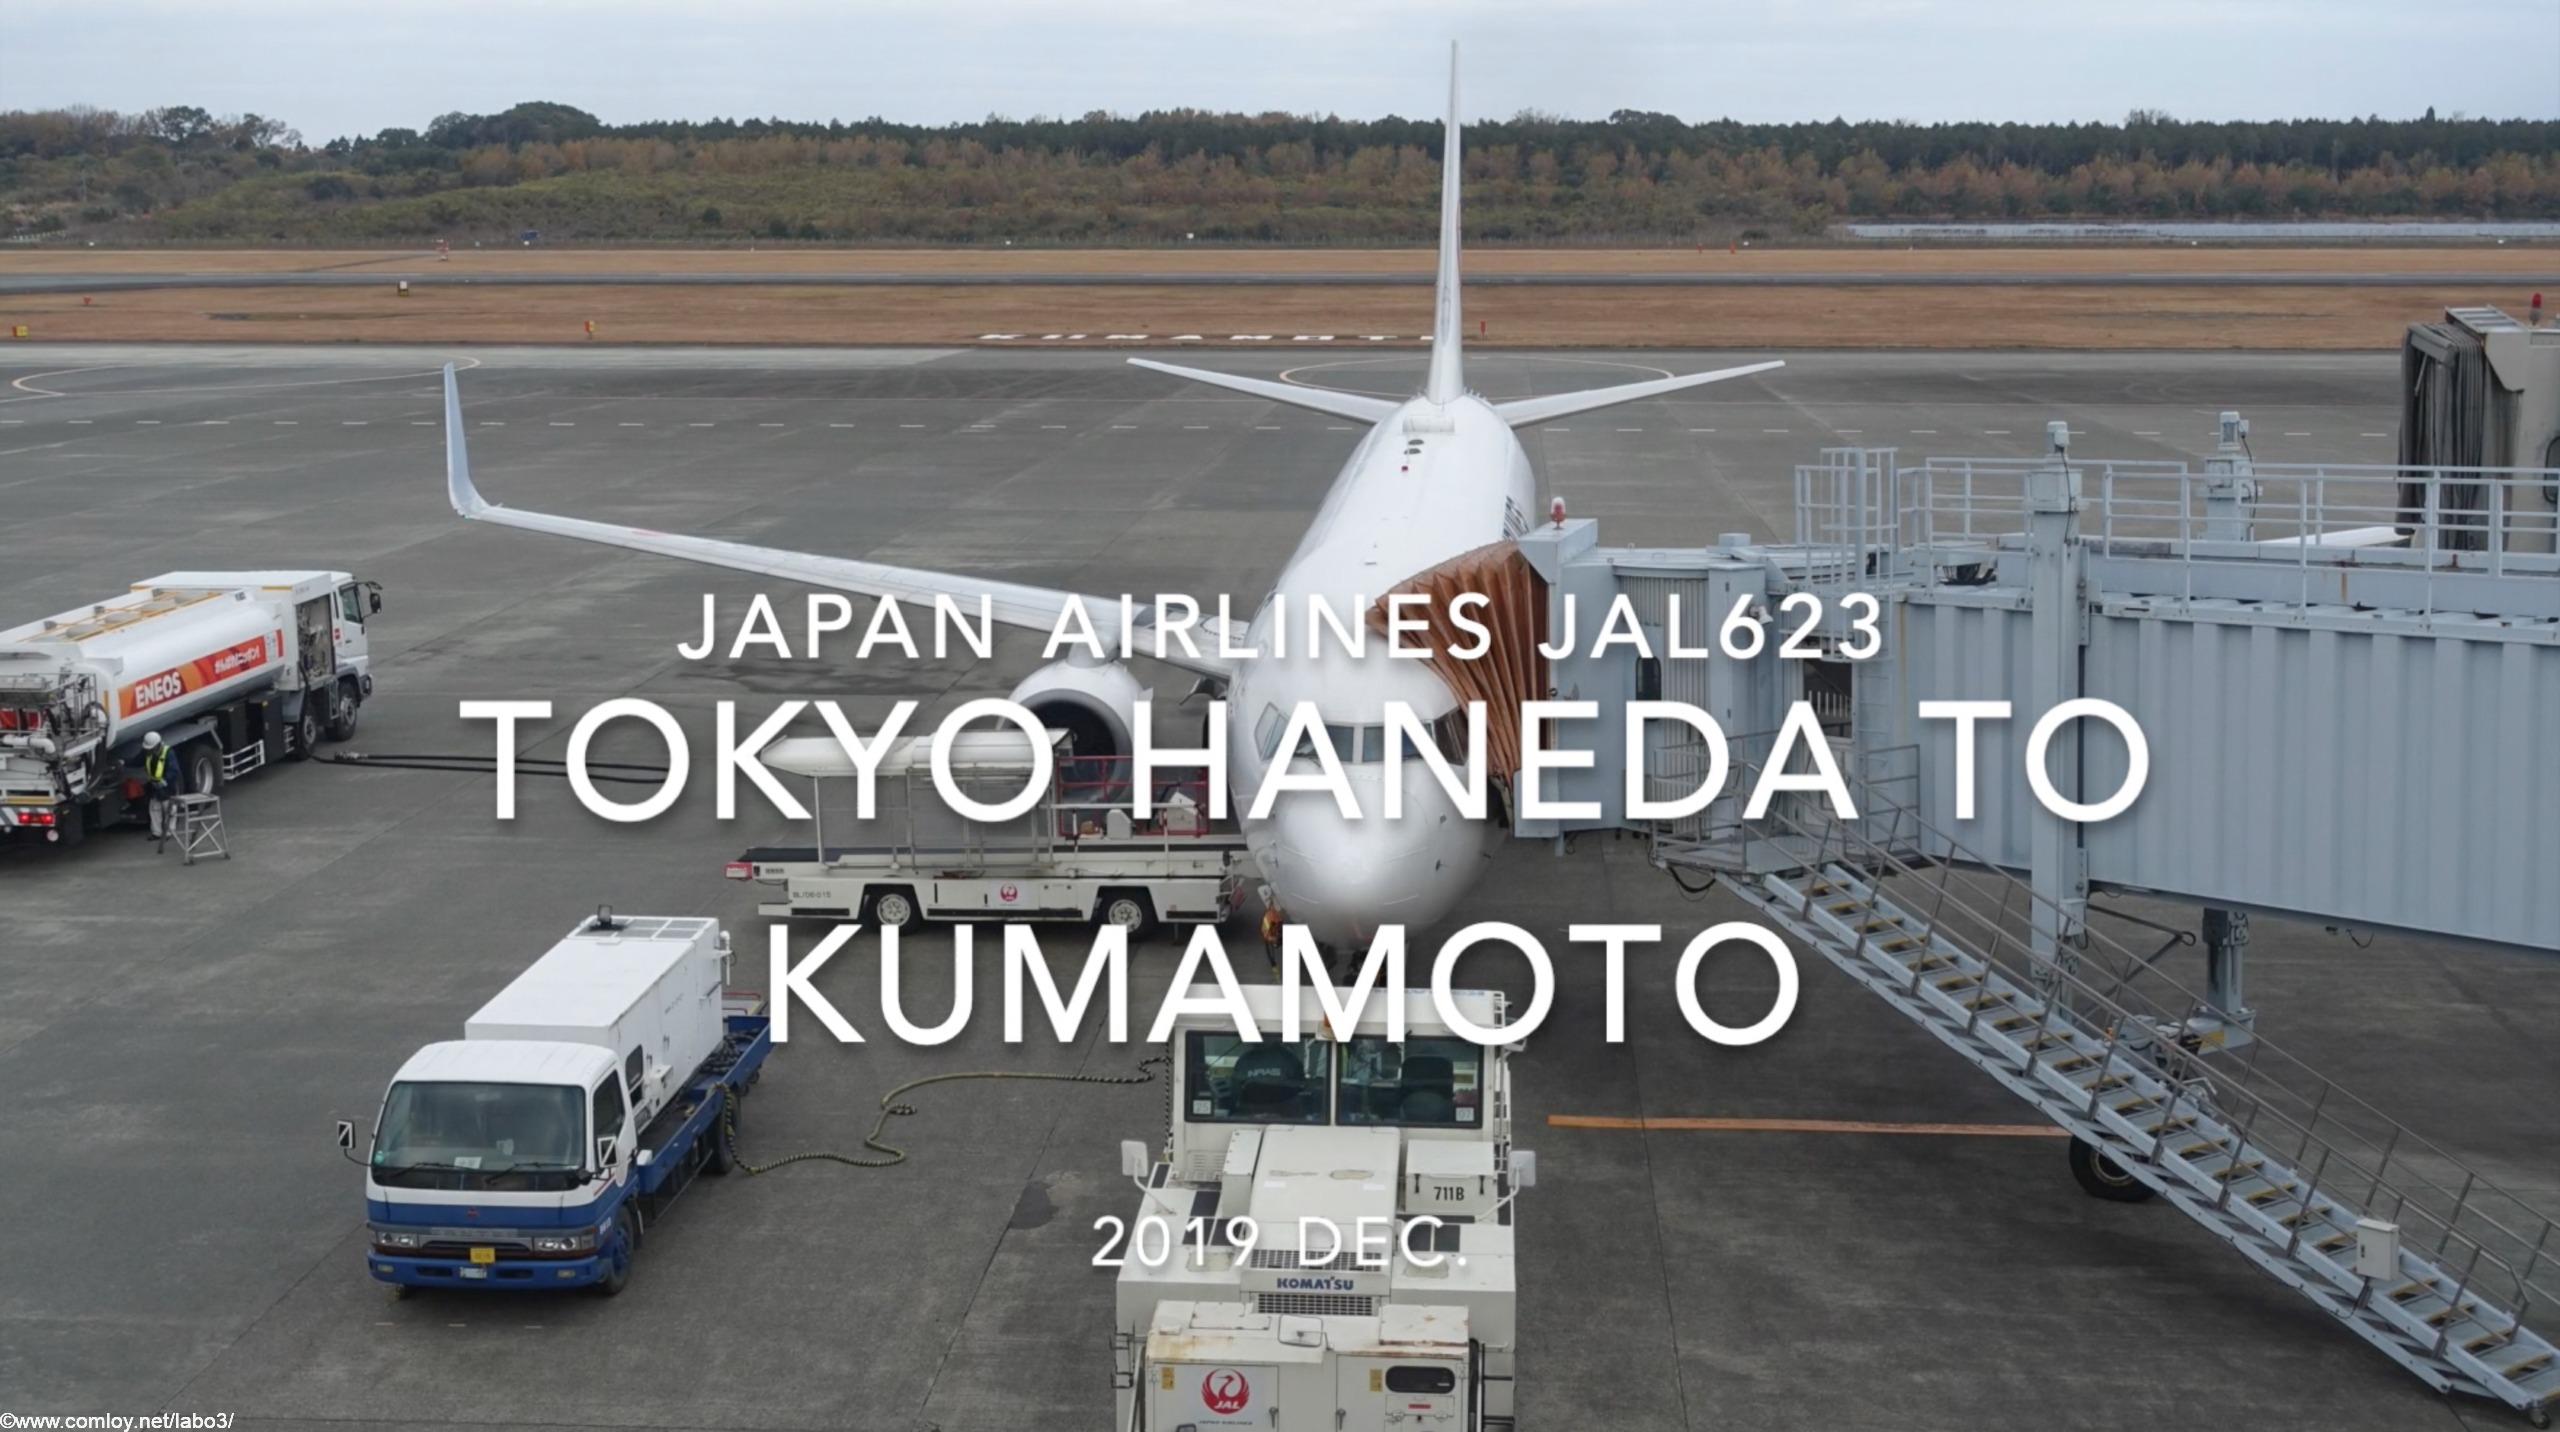 【Flight Report】2019 DEC Japan airlines JAL623 TOKYO HANEDA TO KUMAMOTO 日本航空 羽田 - 熊本 搭乗記